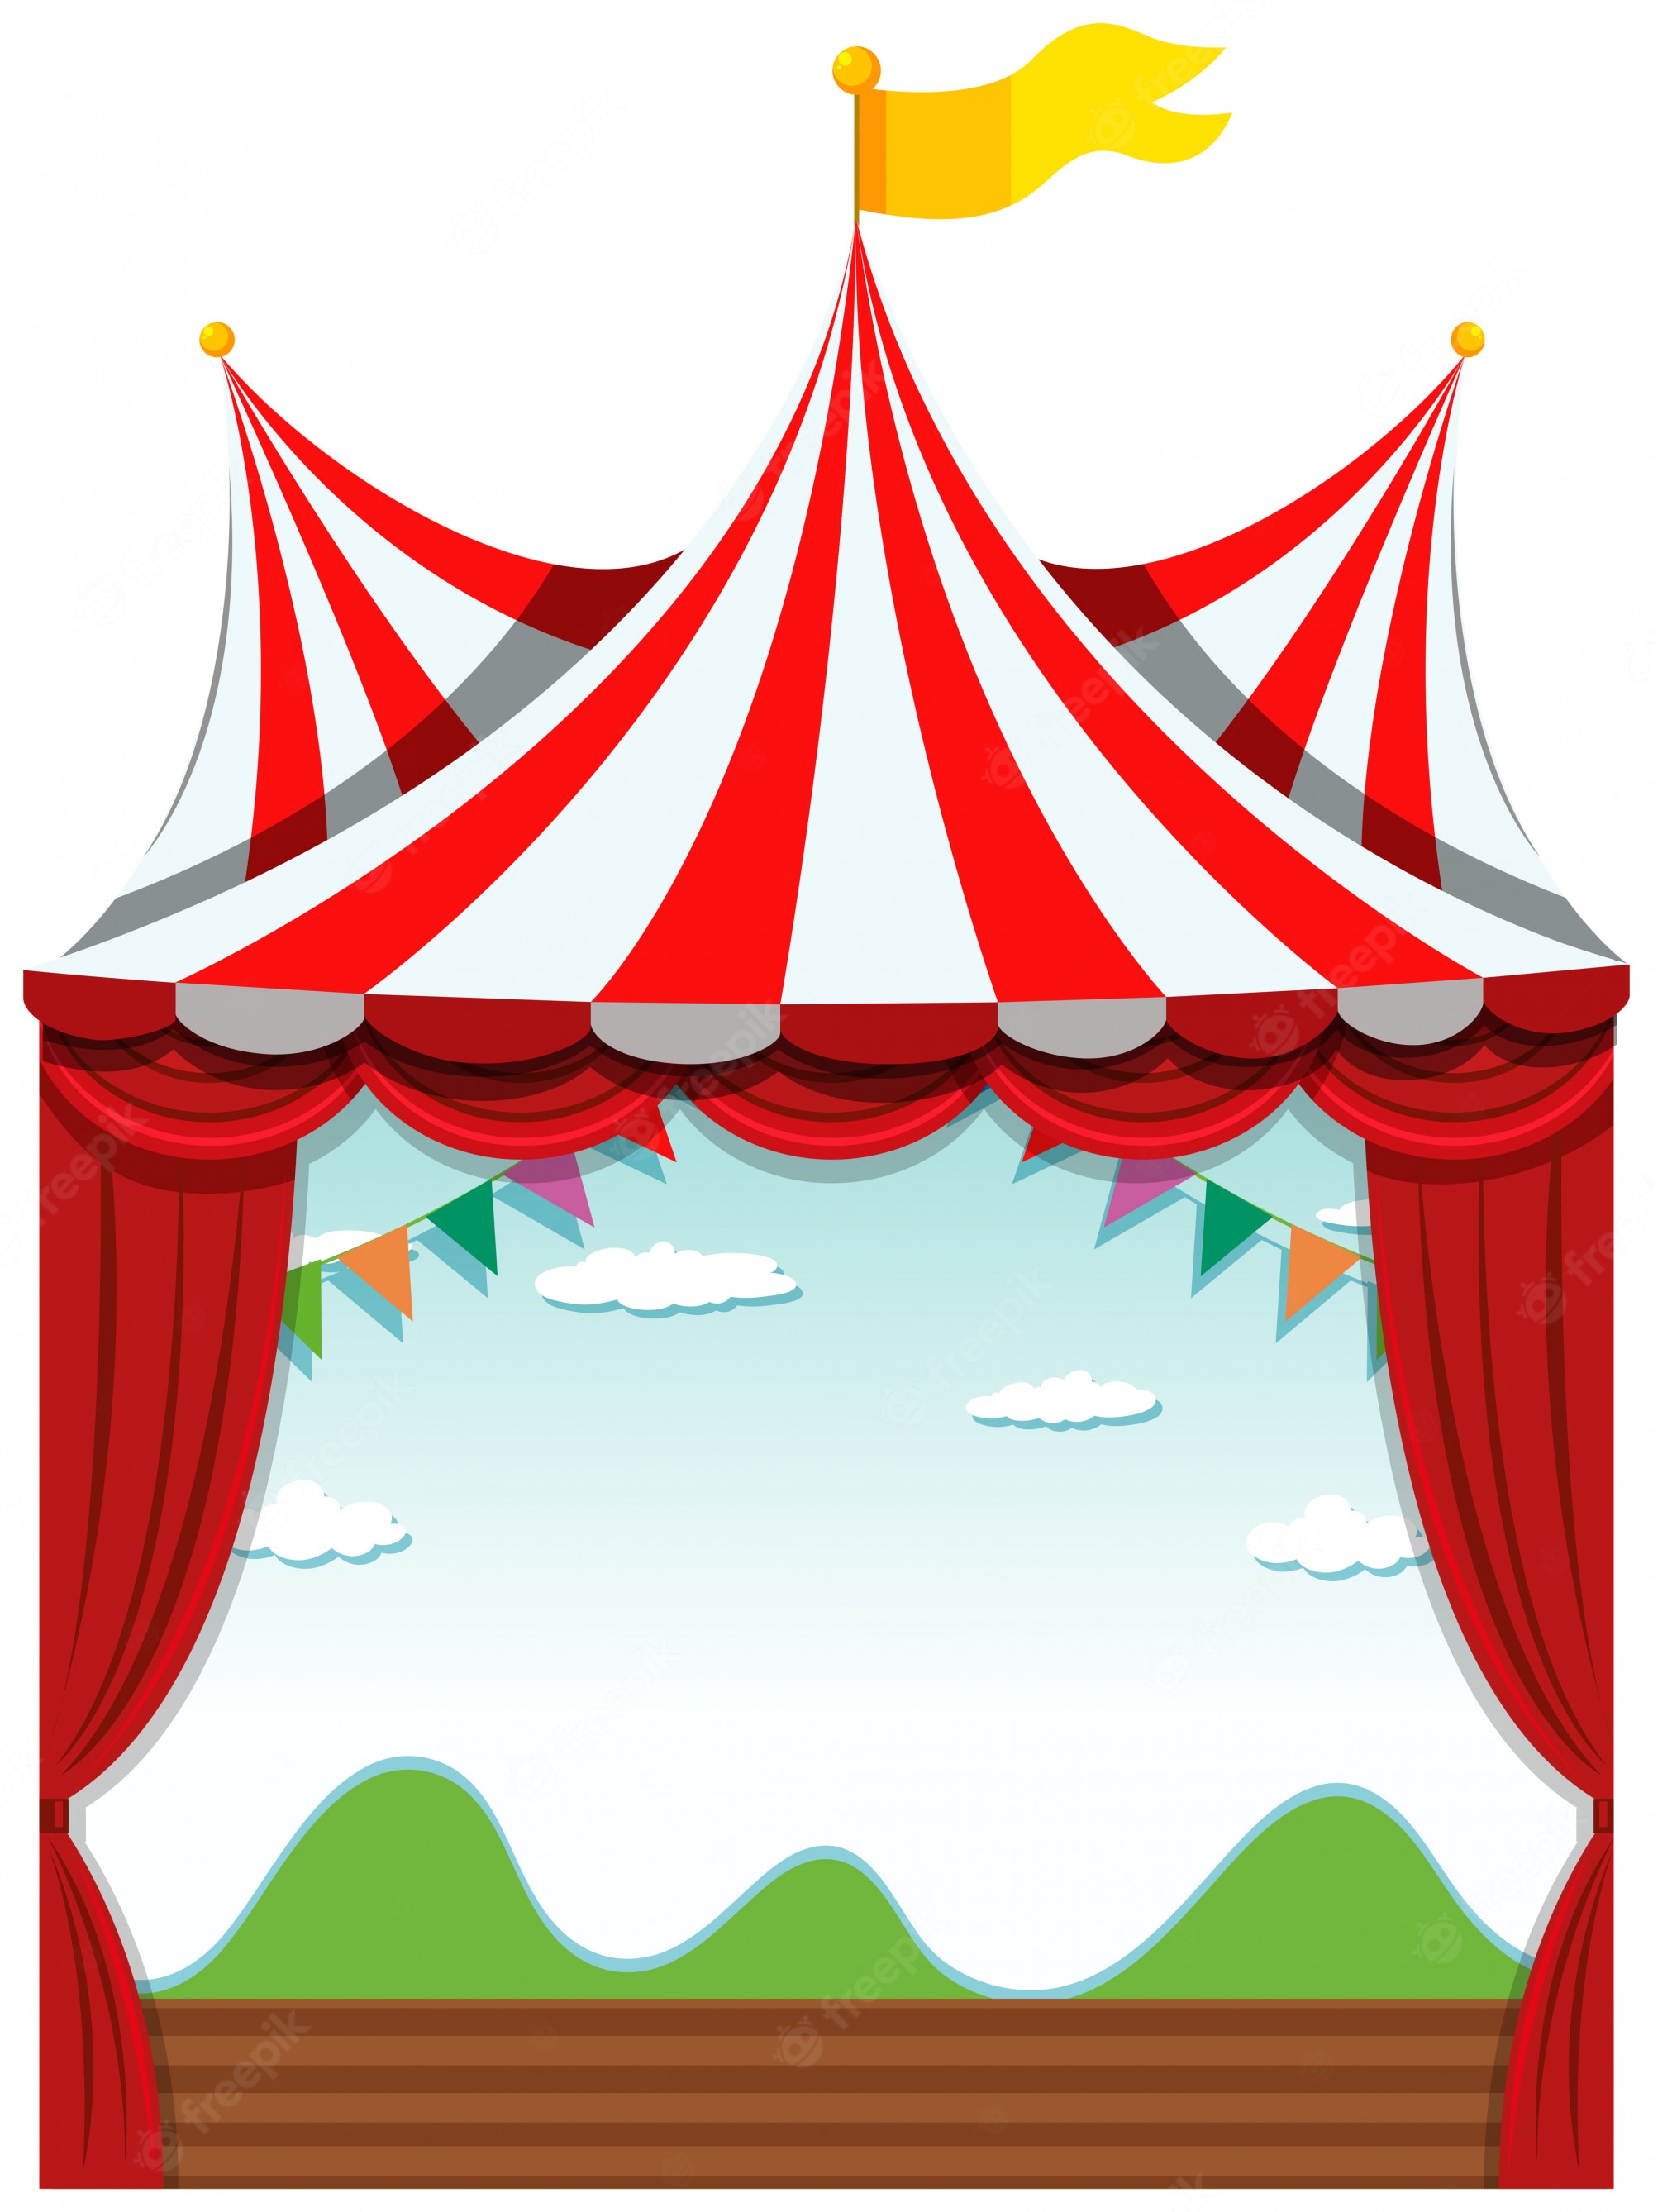 Circus Tent Image. Free Vectors, & PSD